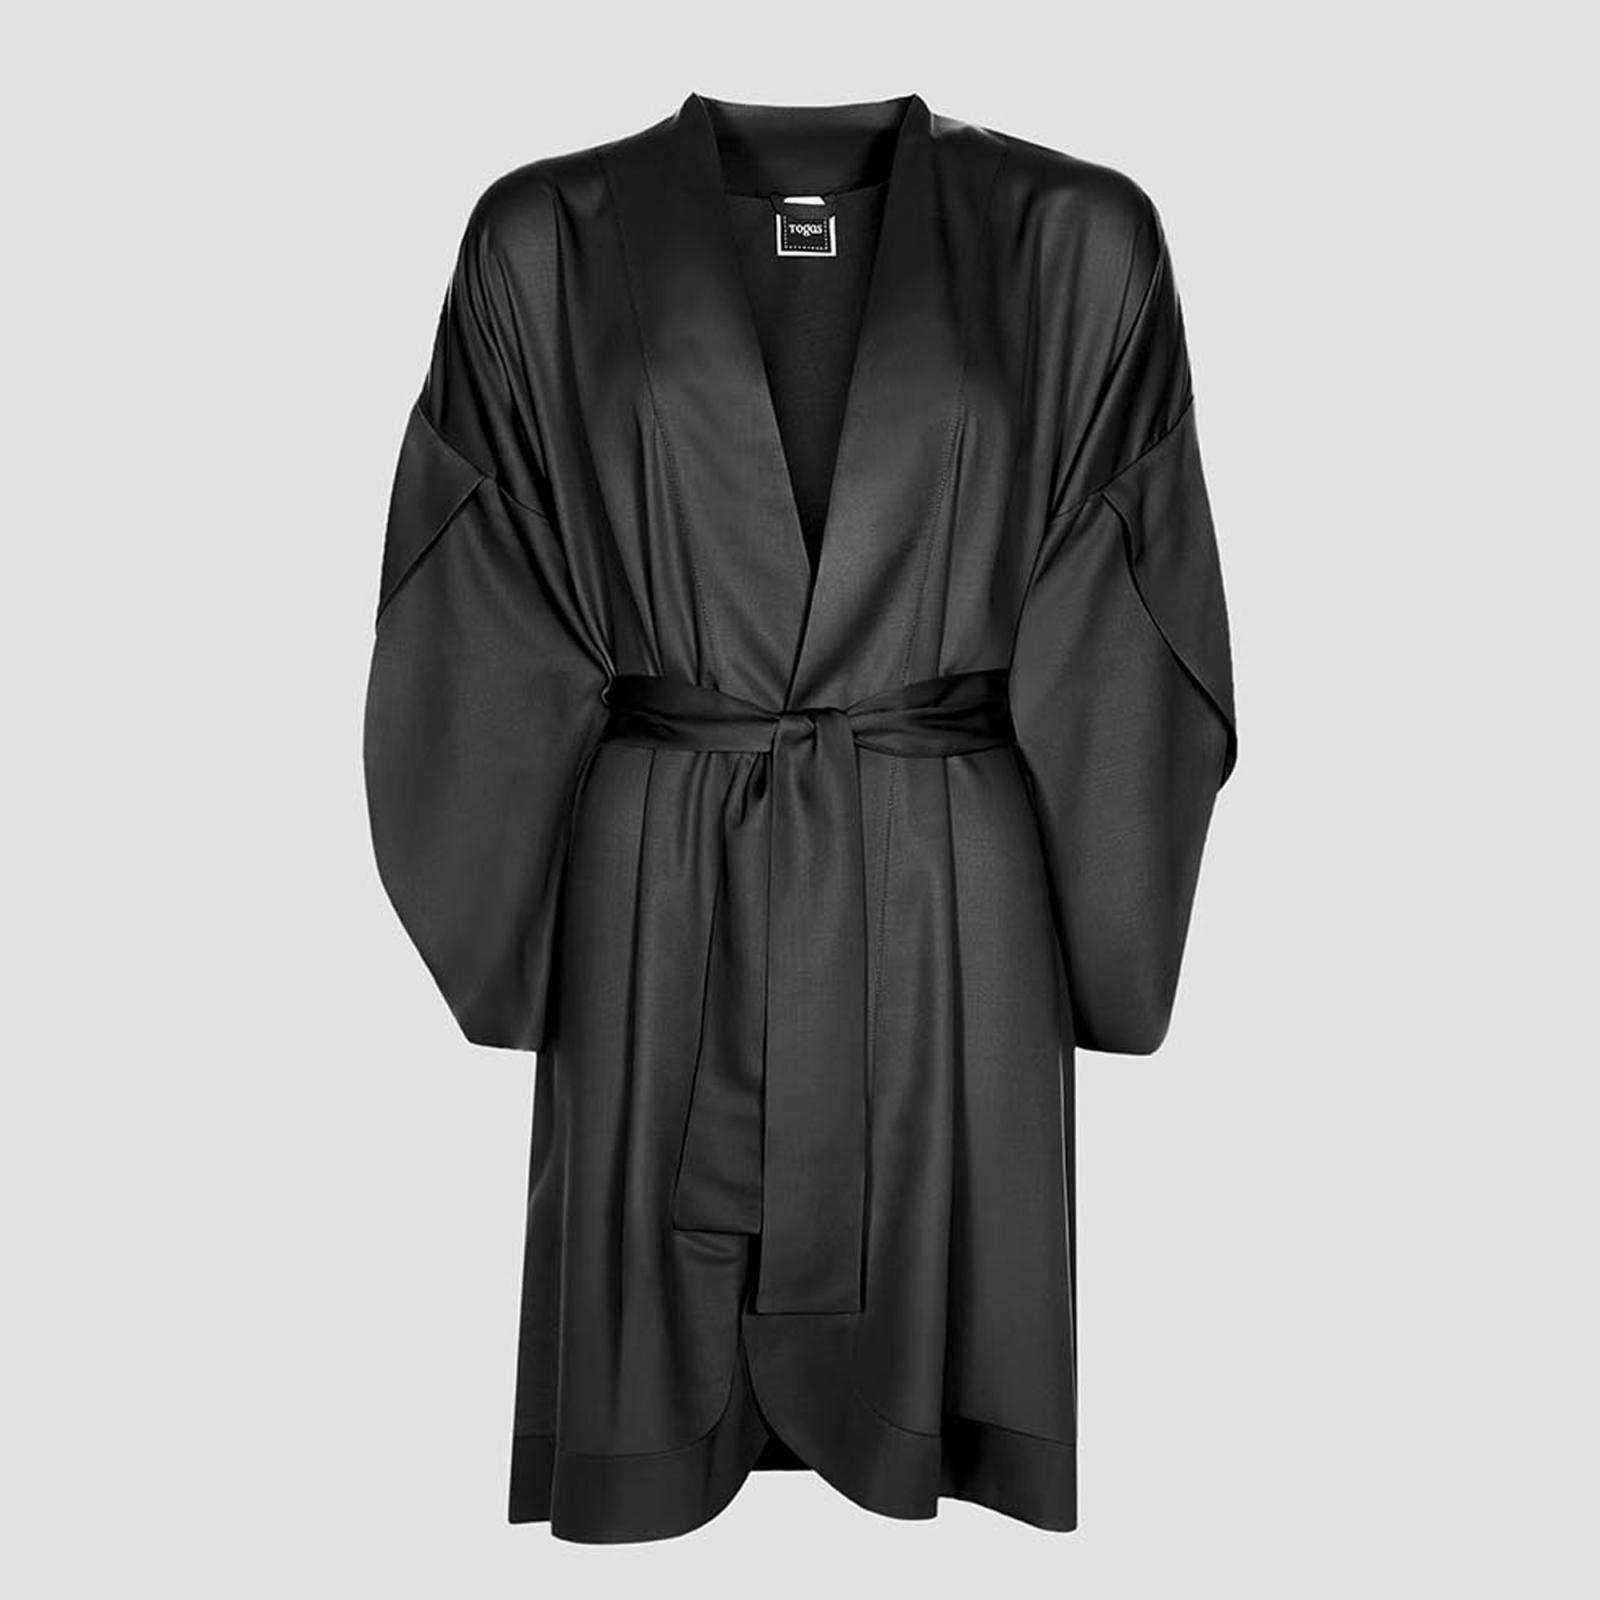 Халат-кимоно короткое Togas Наоми чёрное XXL (52) халат кимоно togas наоми зеленый xl 50